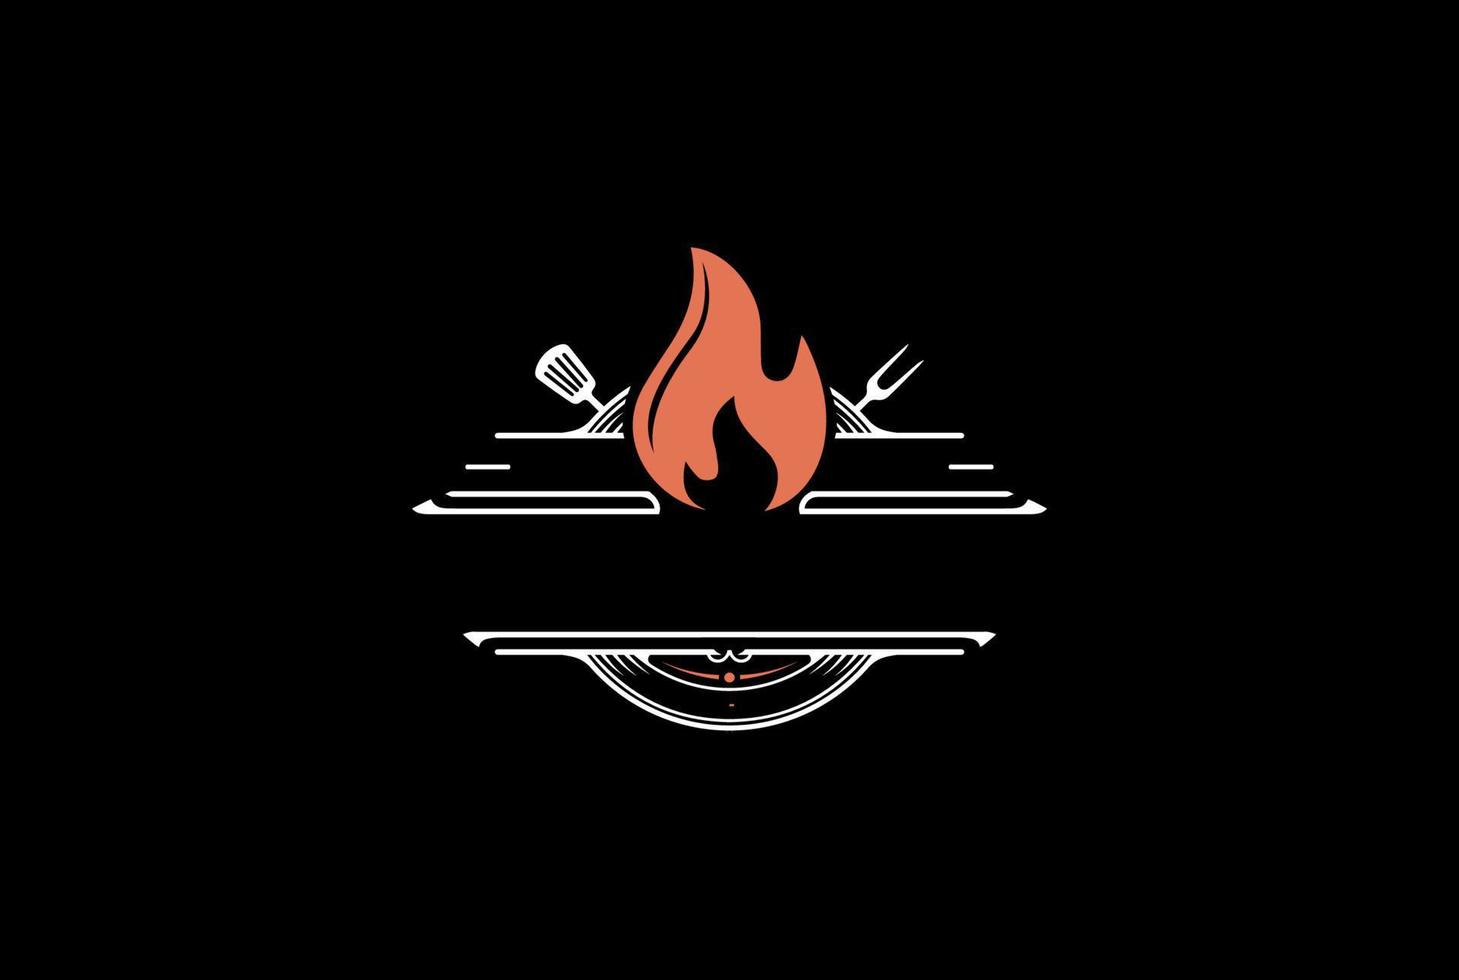 Rustic Retro Vintage BBQ Barbecue Grill Logo Design Vector